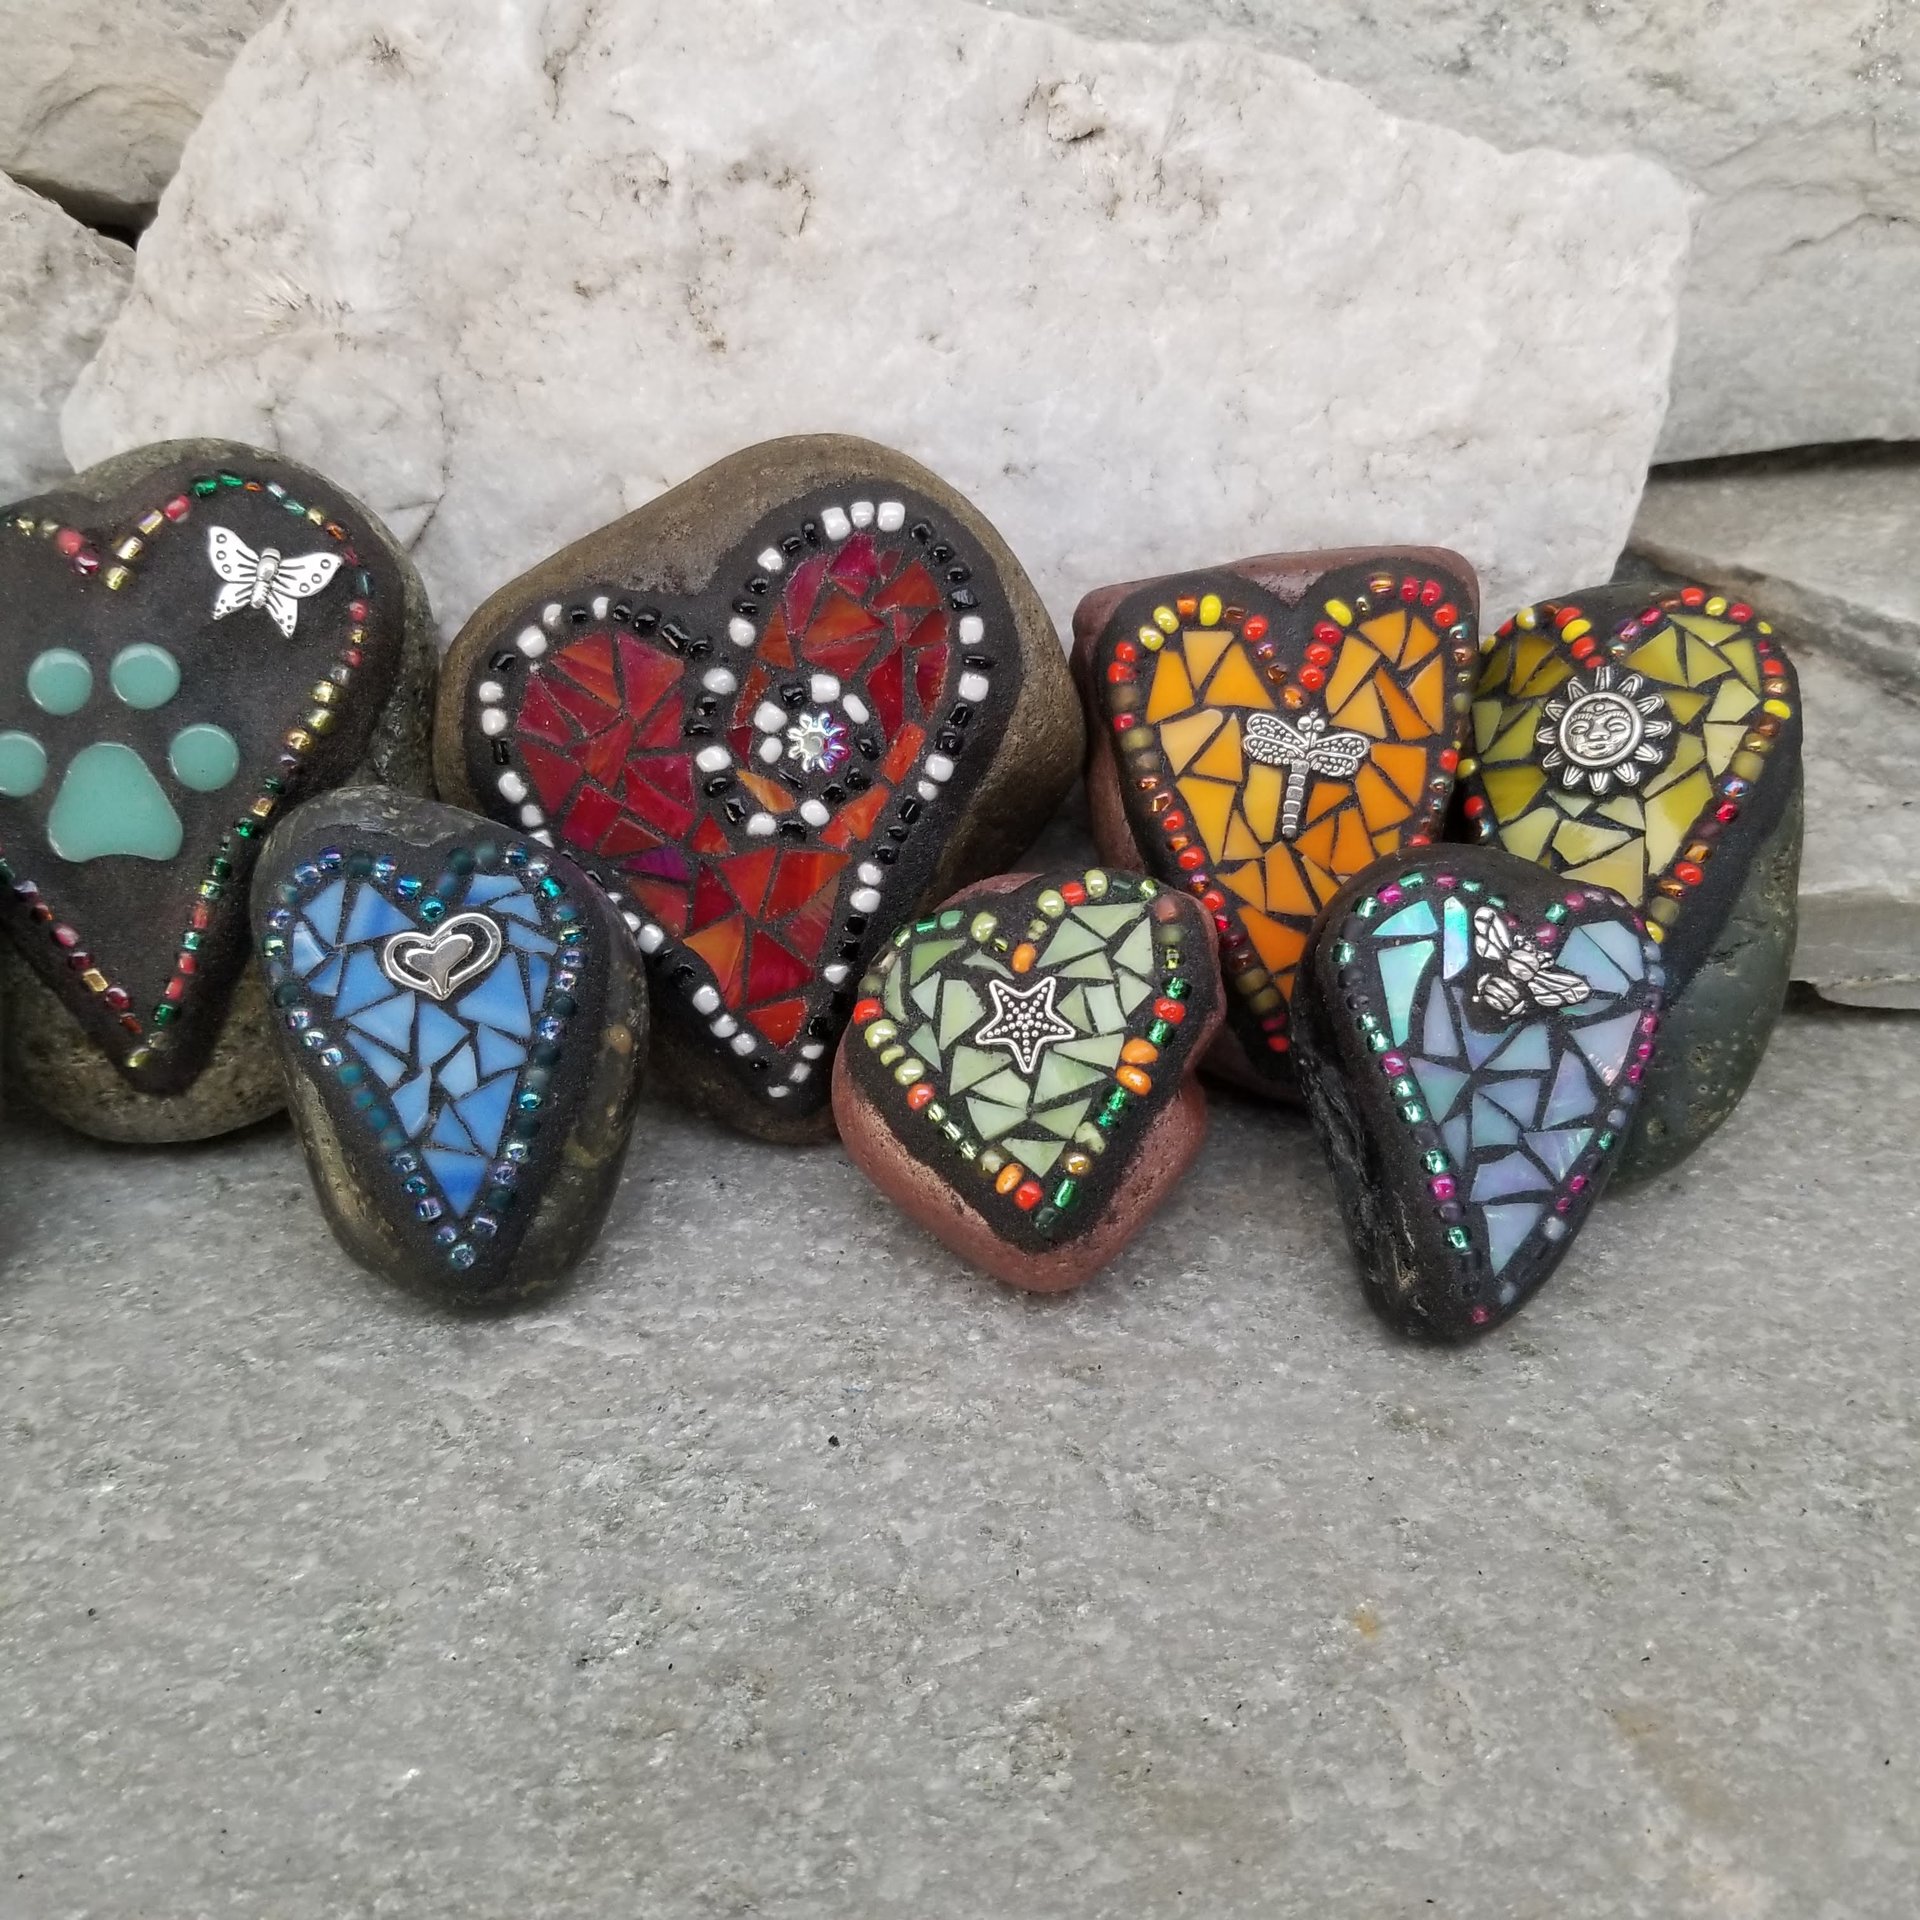 Garden Stone Paperweights  Group Mosaic Heart Rocks, Mosaic Garden Stone, Home Decor, Gardening, Gardening Gift,